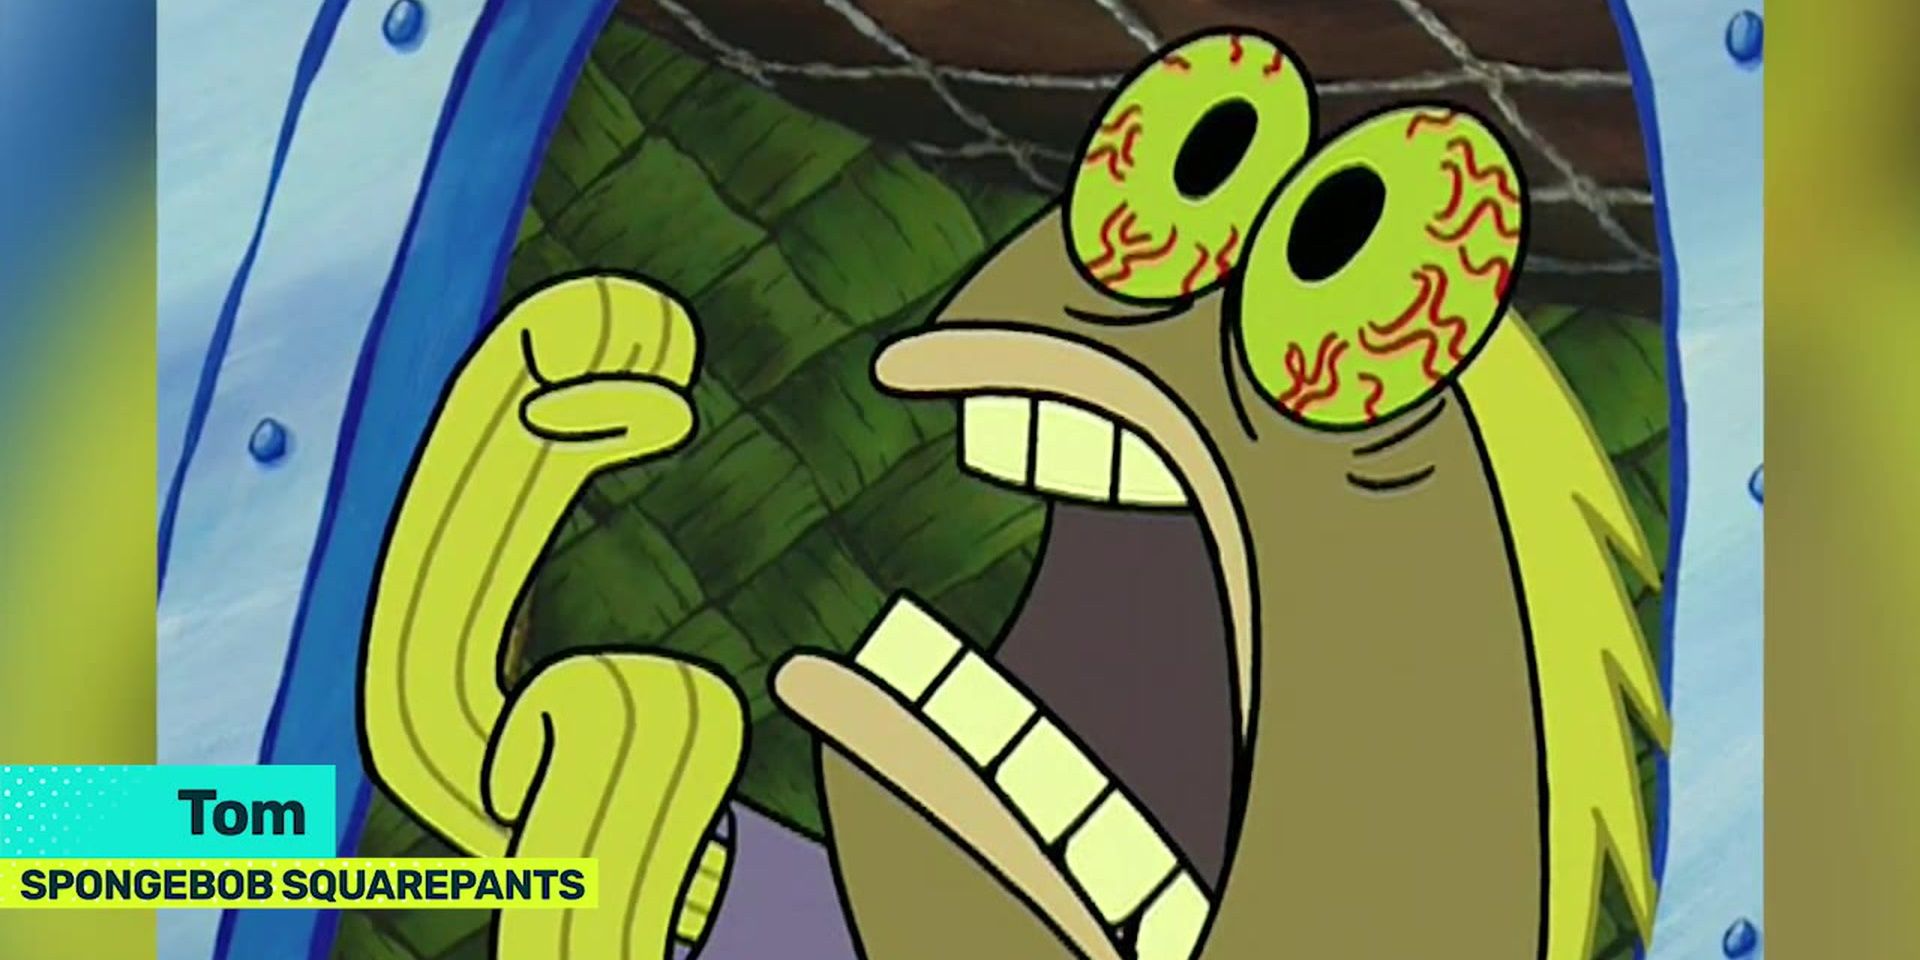 Screaming Chocolate Guy with eyes bulging. Image source: Encyclopedia SpongeBobia